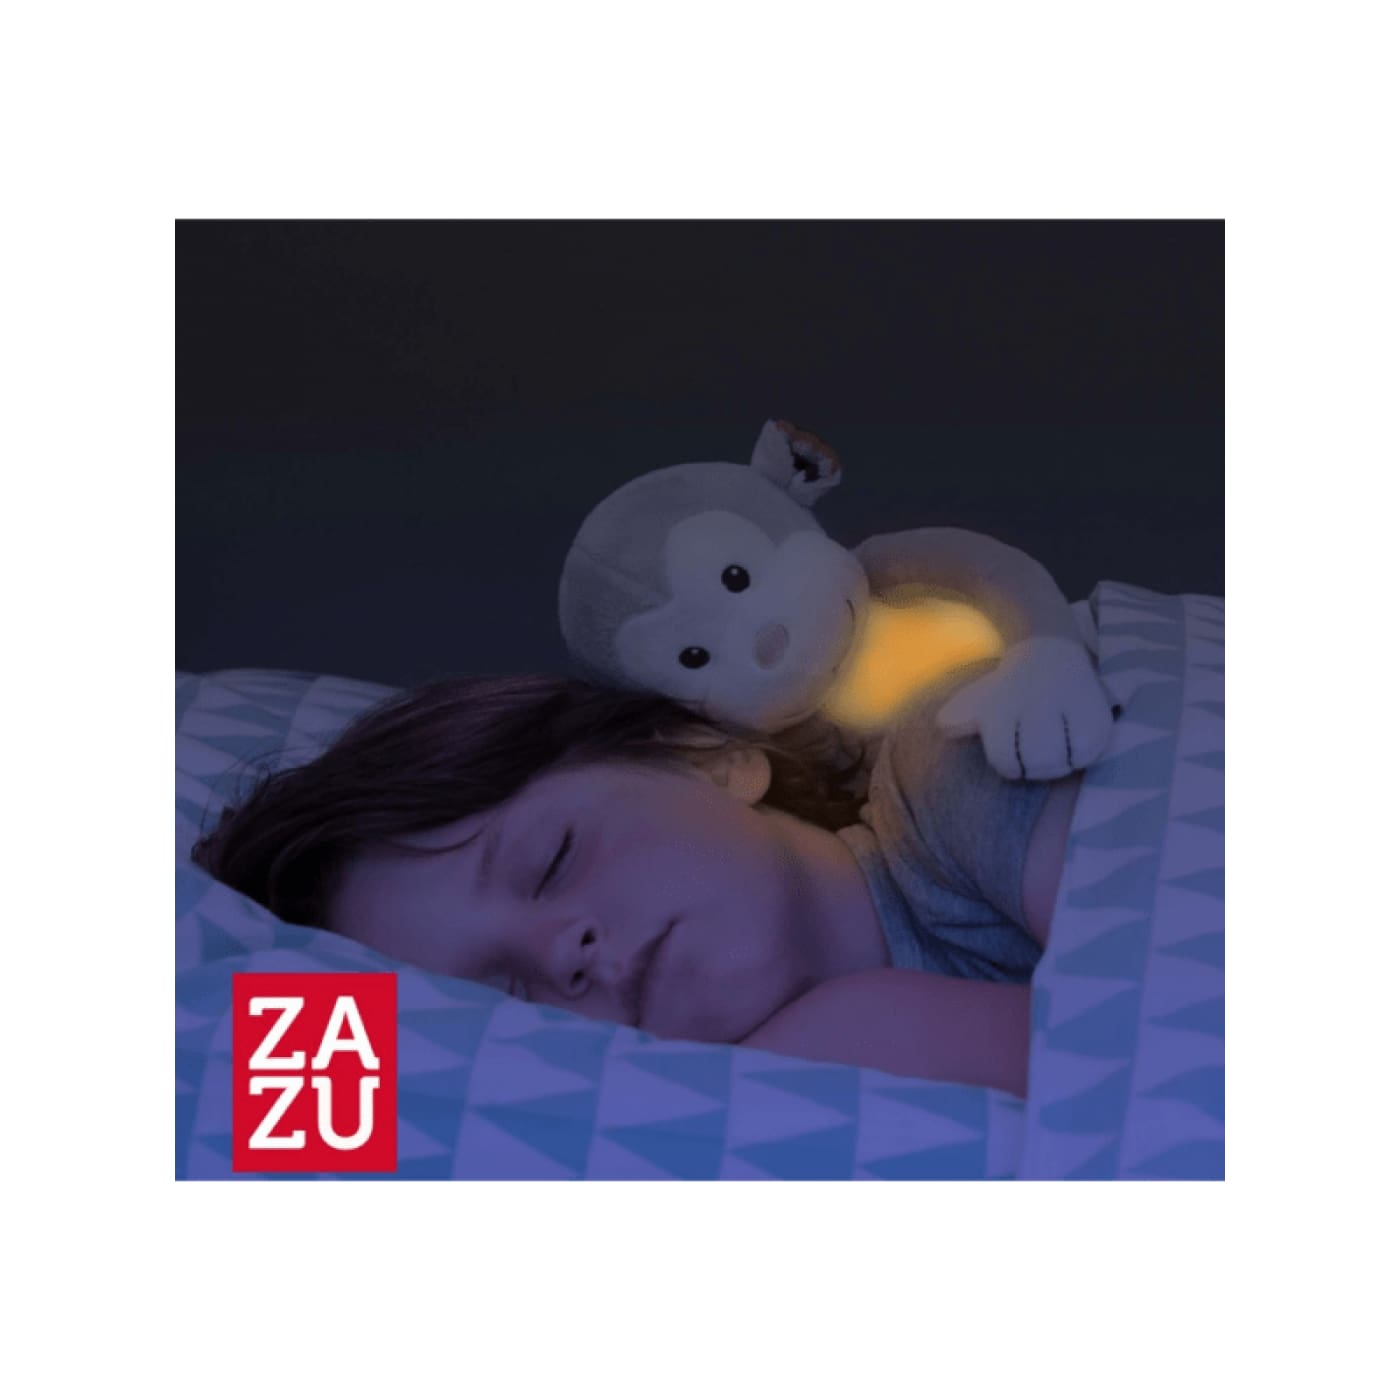 Zazu Soft Toy Nightlight with Melodies - Max - Monkey - NURSERY & BEDTIME - SLEEP AIDS/NIGHT LIGHTS